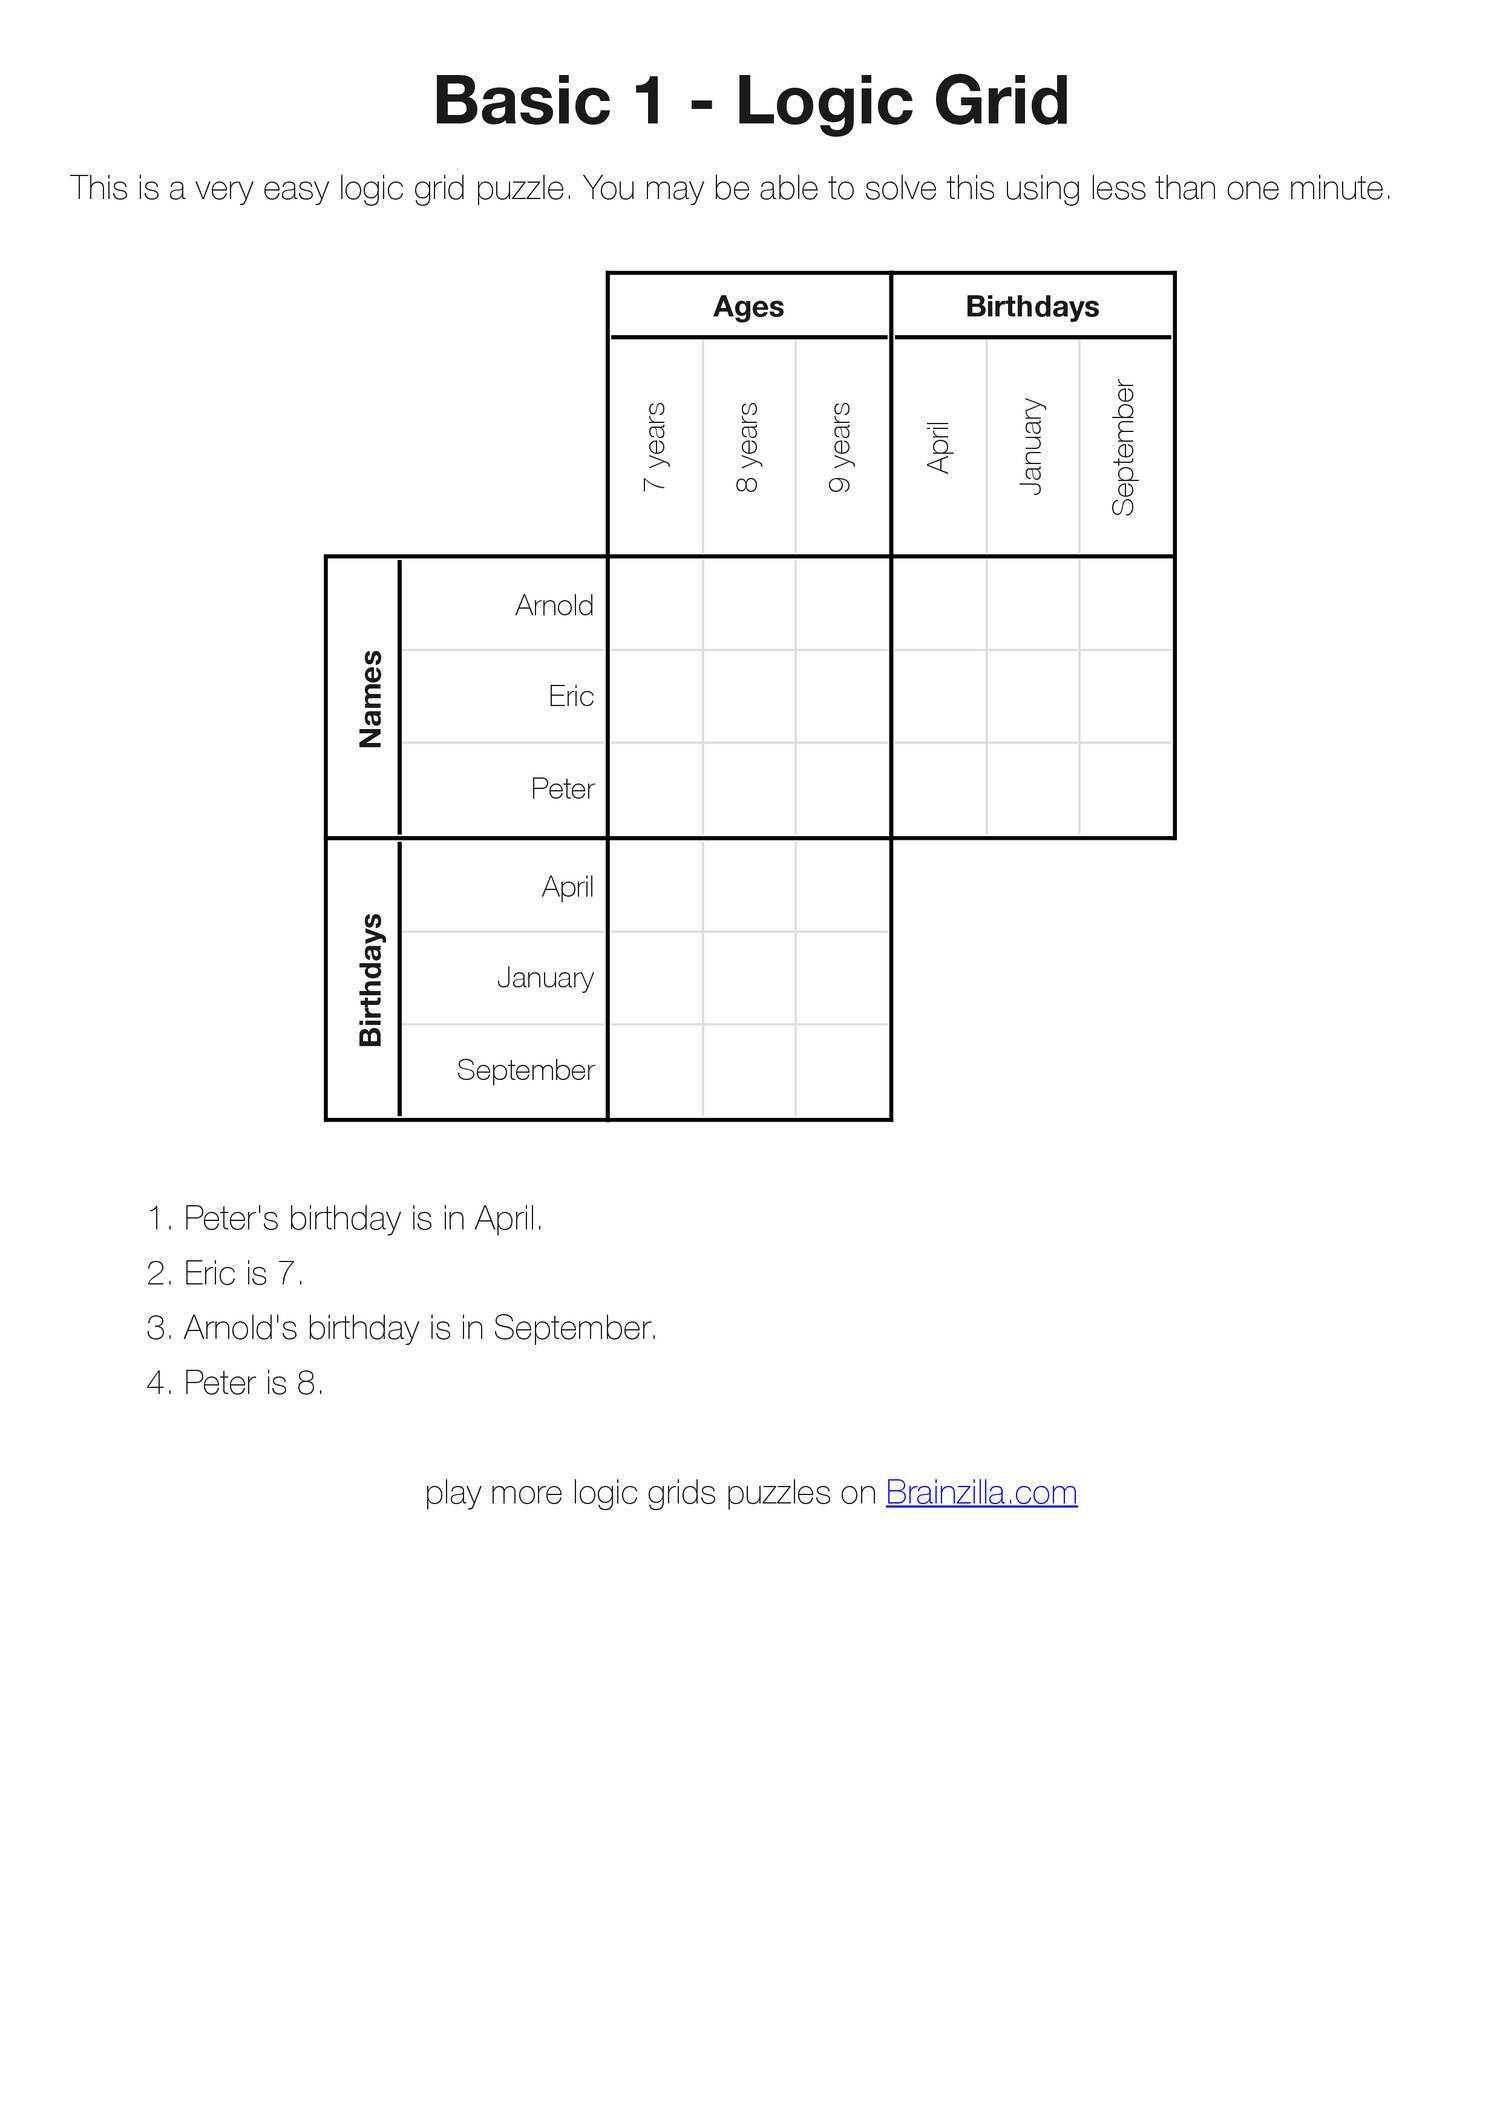 Printable Logic Grid Puzzles Brainzilla pdf DocDroid